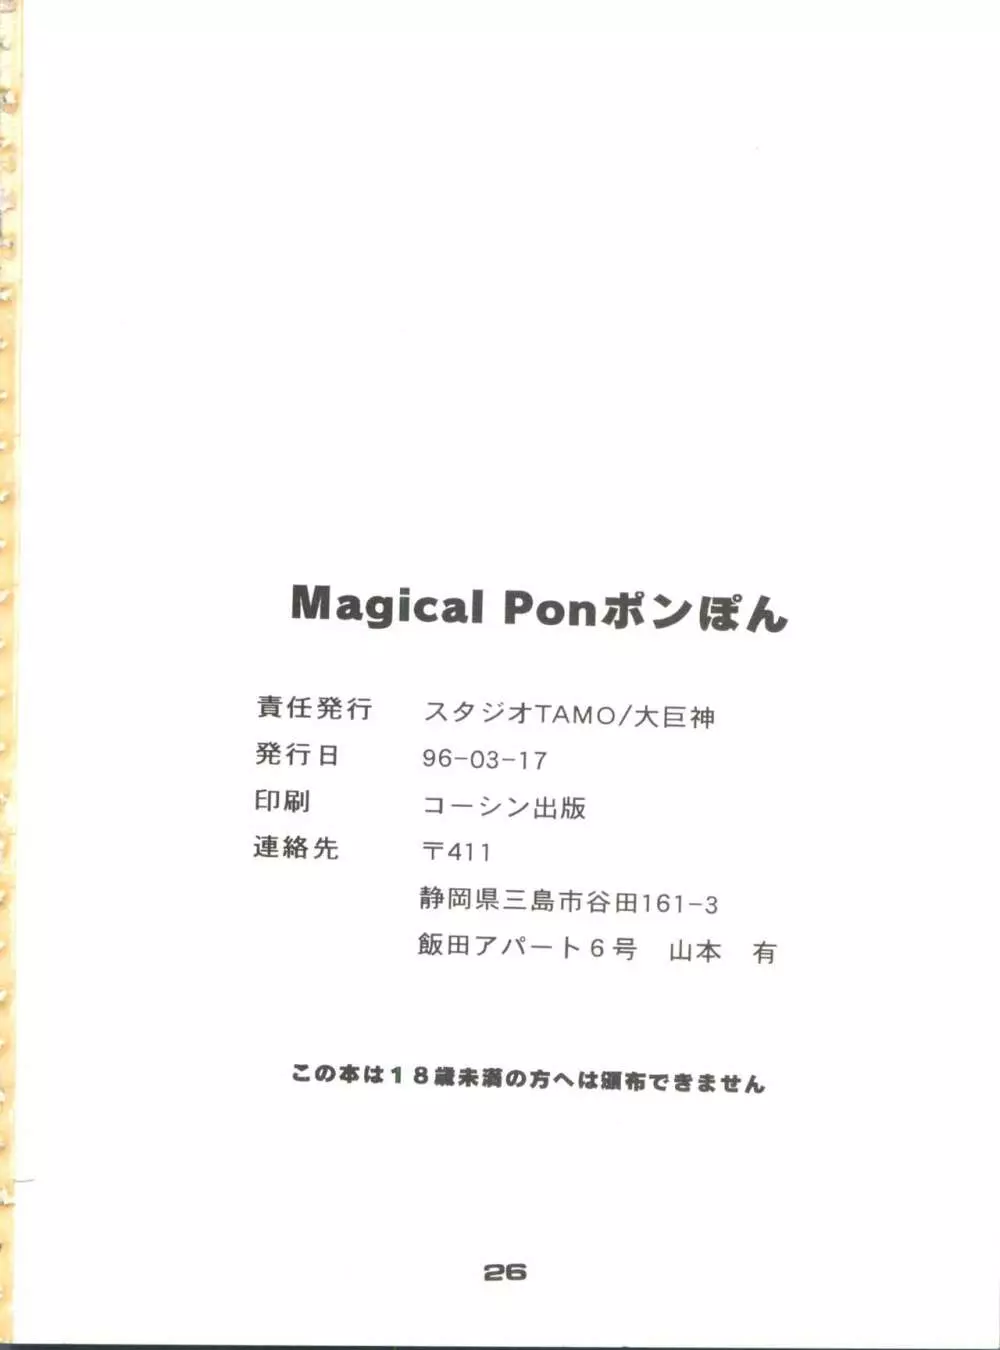 Magical Ponポンぽん return 25ページ